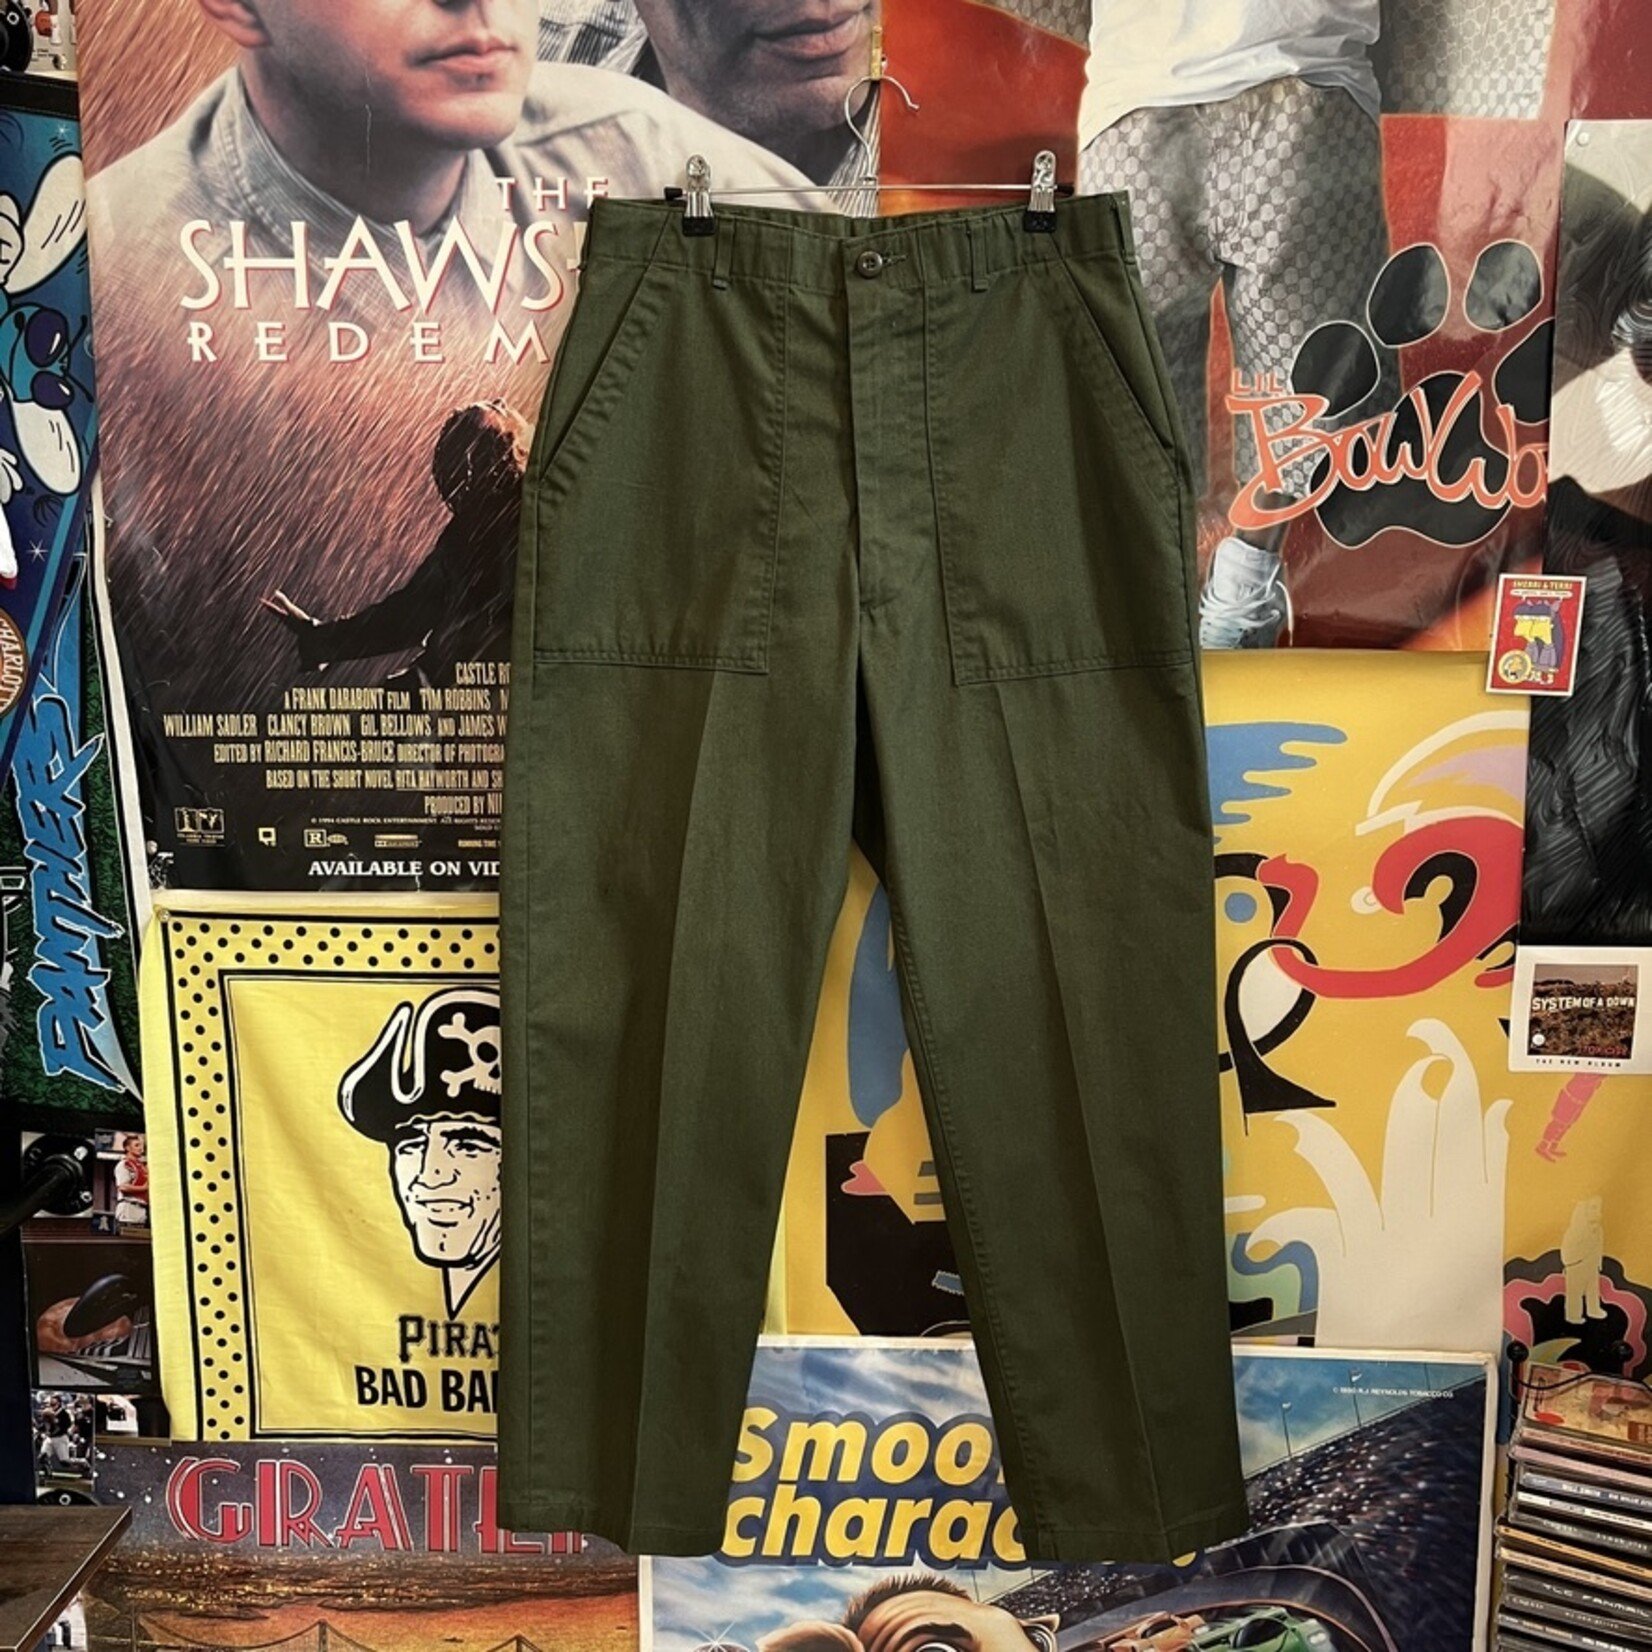 13639	military pants green sz 34 x 29